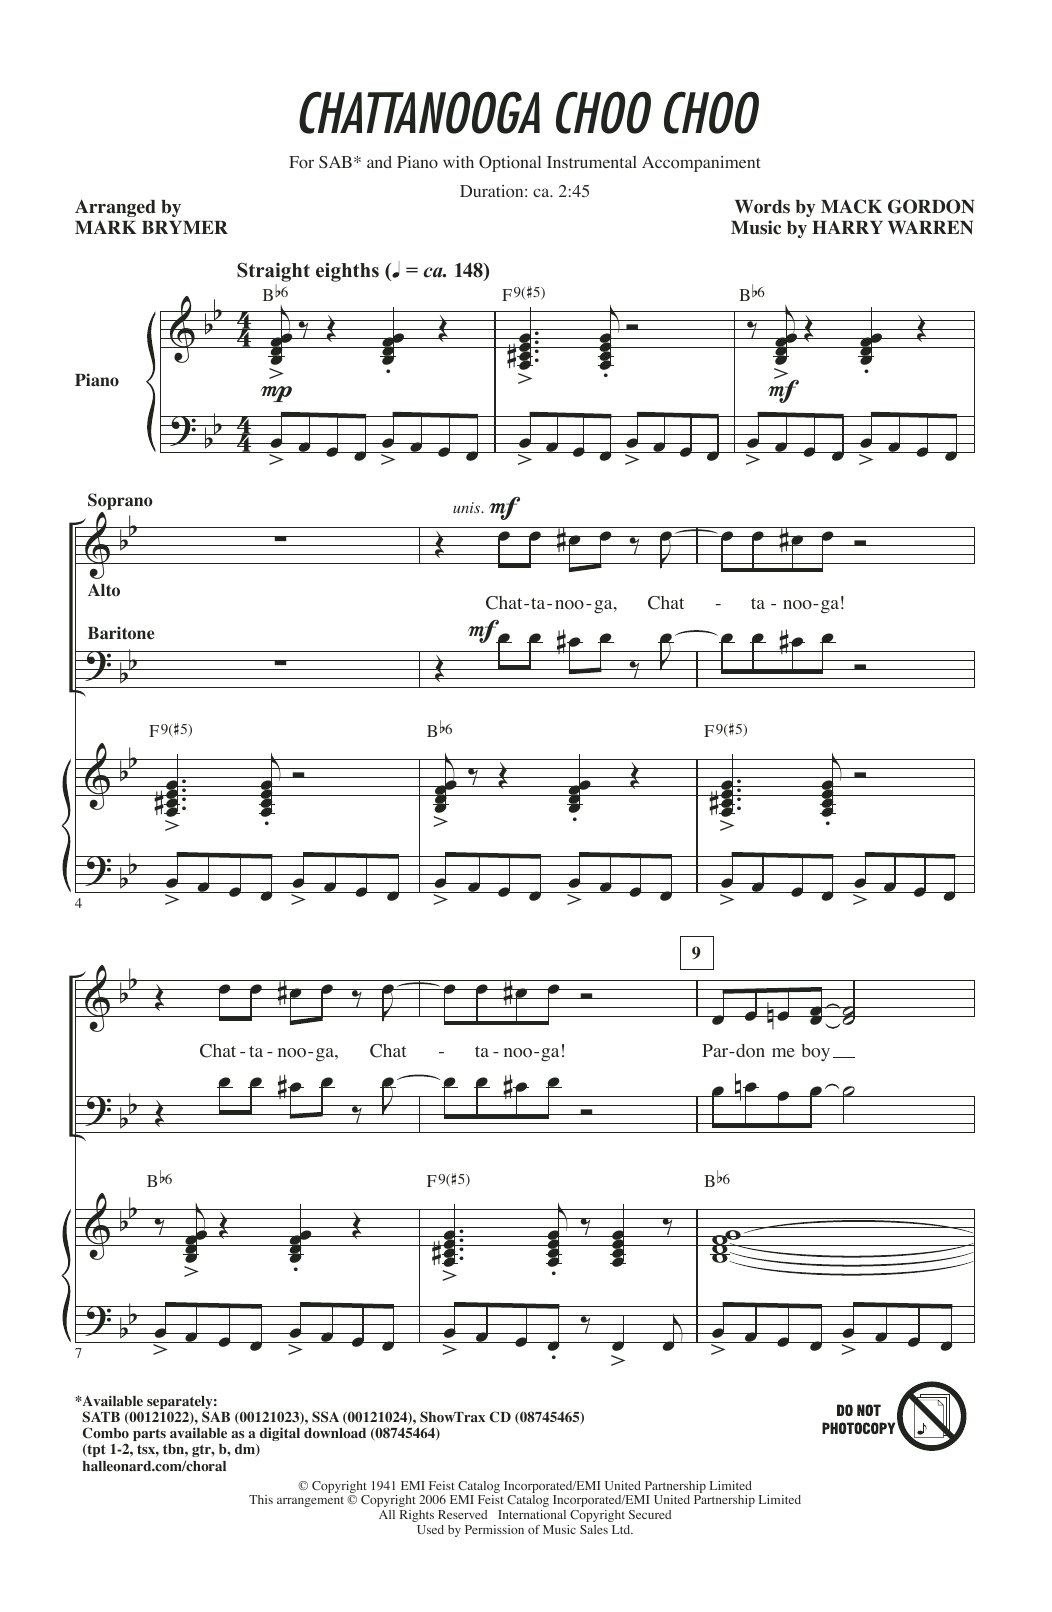 Mark Brymer Chattanooga Choo Choo Sheet Music Notes & Chords for SAB - Download or Print PDF